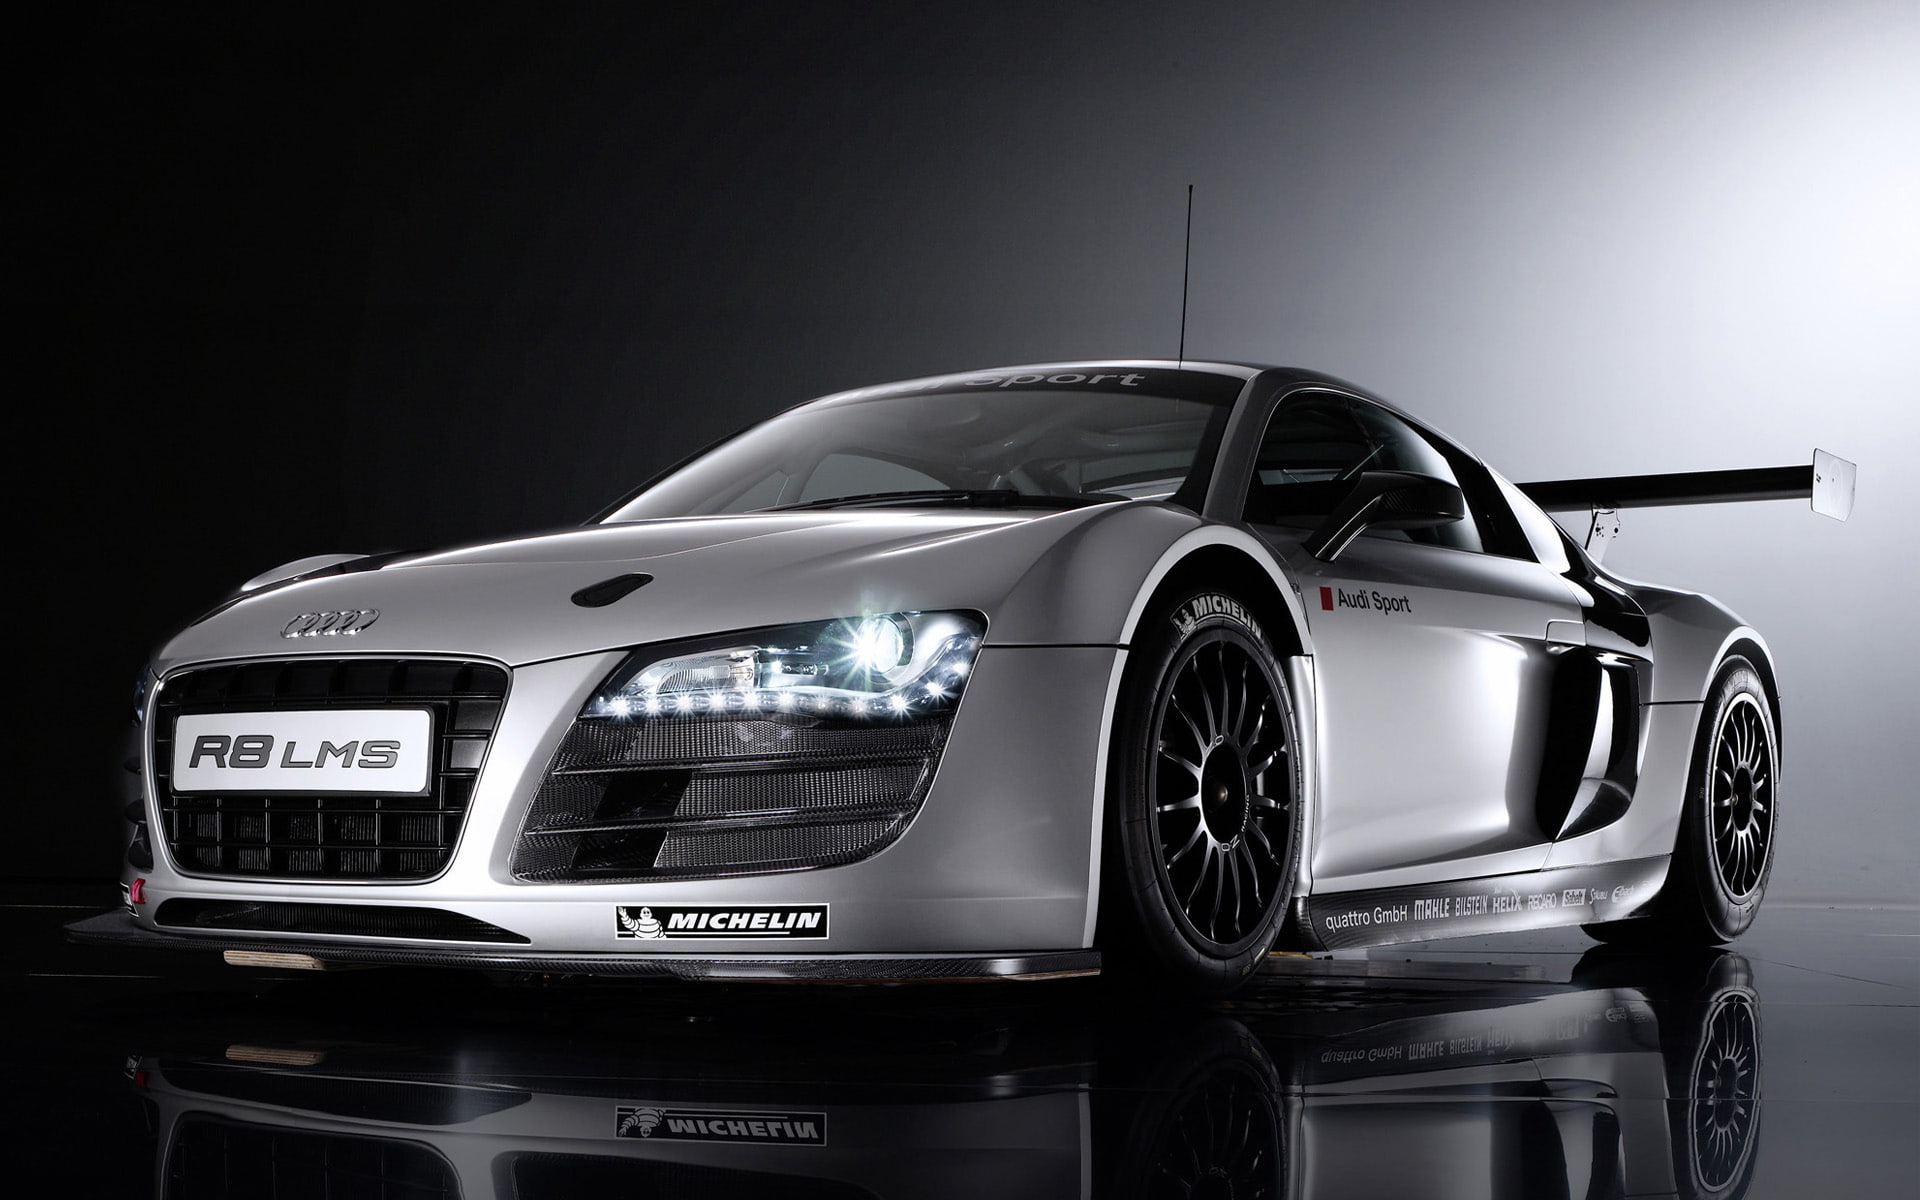 Audi r8, Car, LMS, Famous Brand, Audi Sport, Four Rings